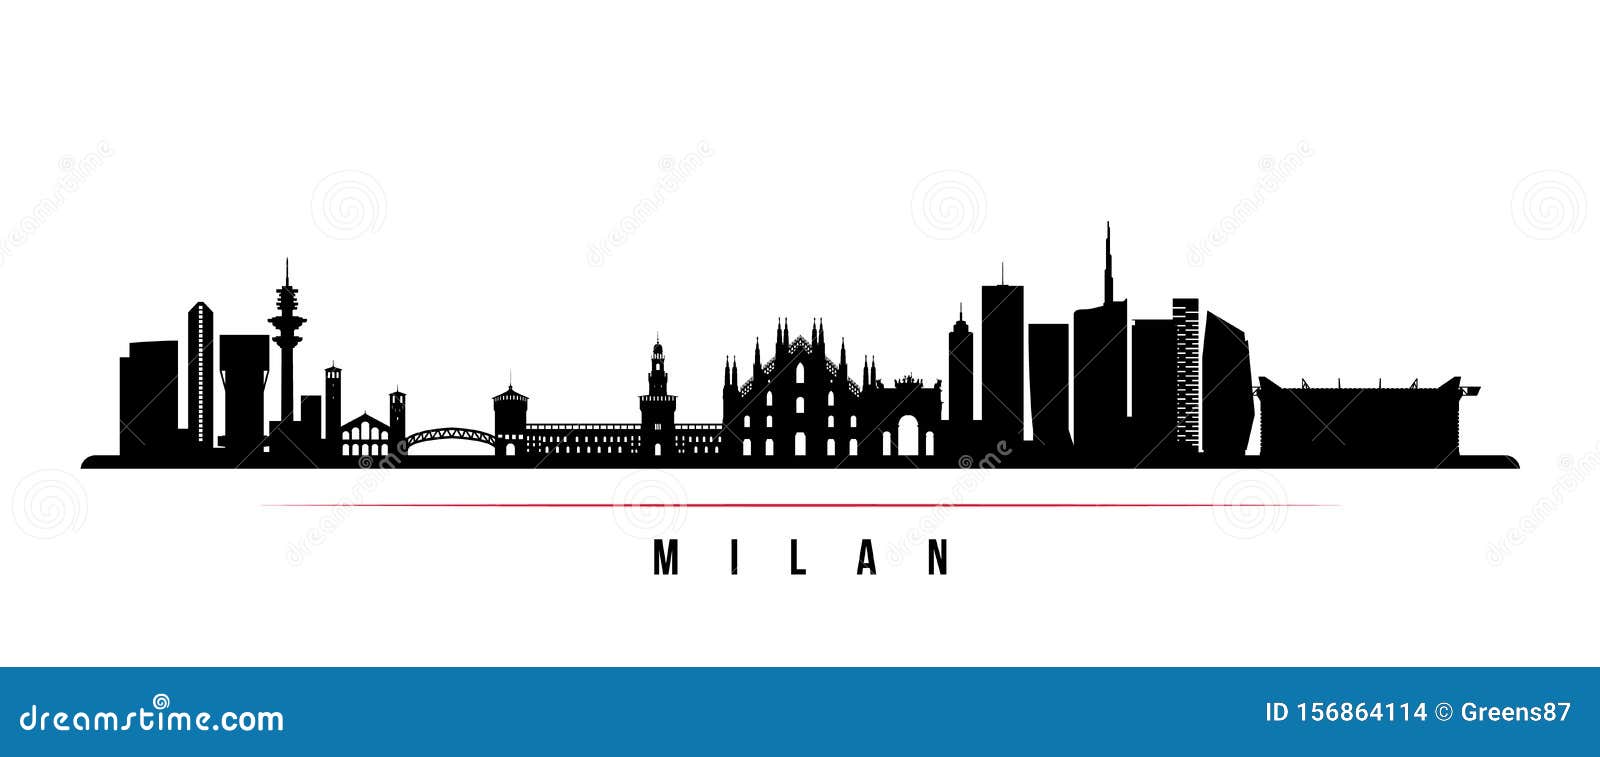 milan city skyline horizontal banner.